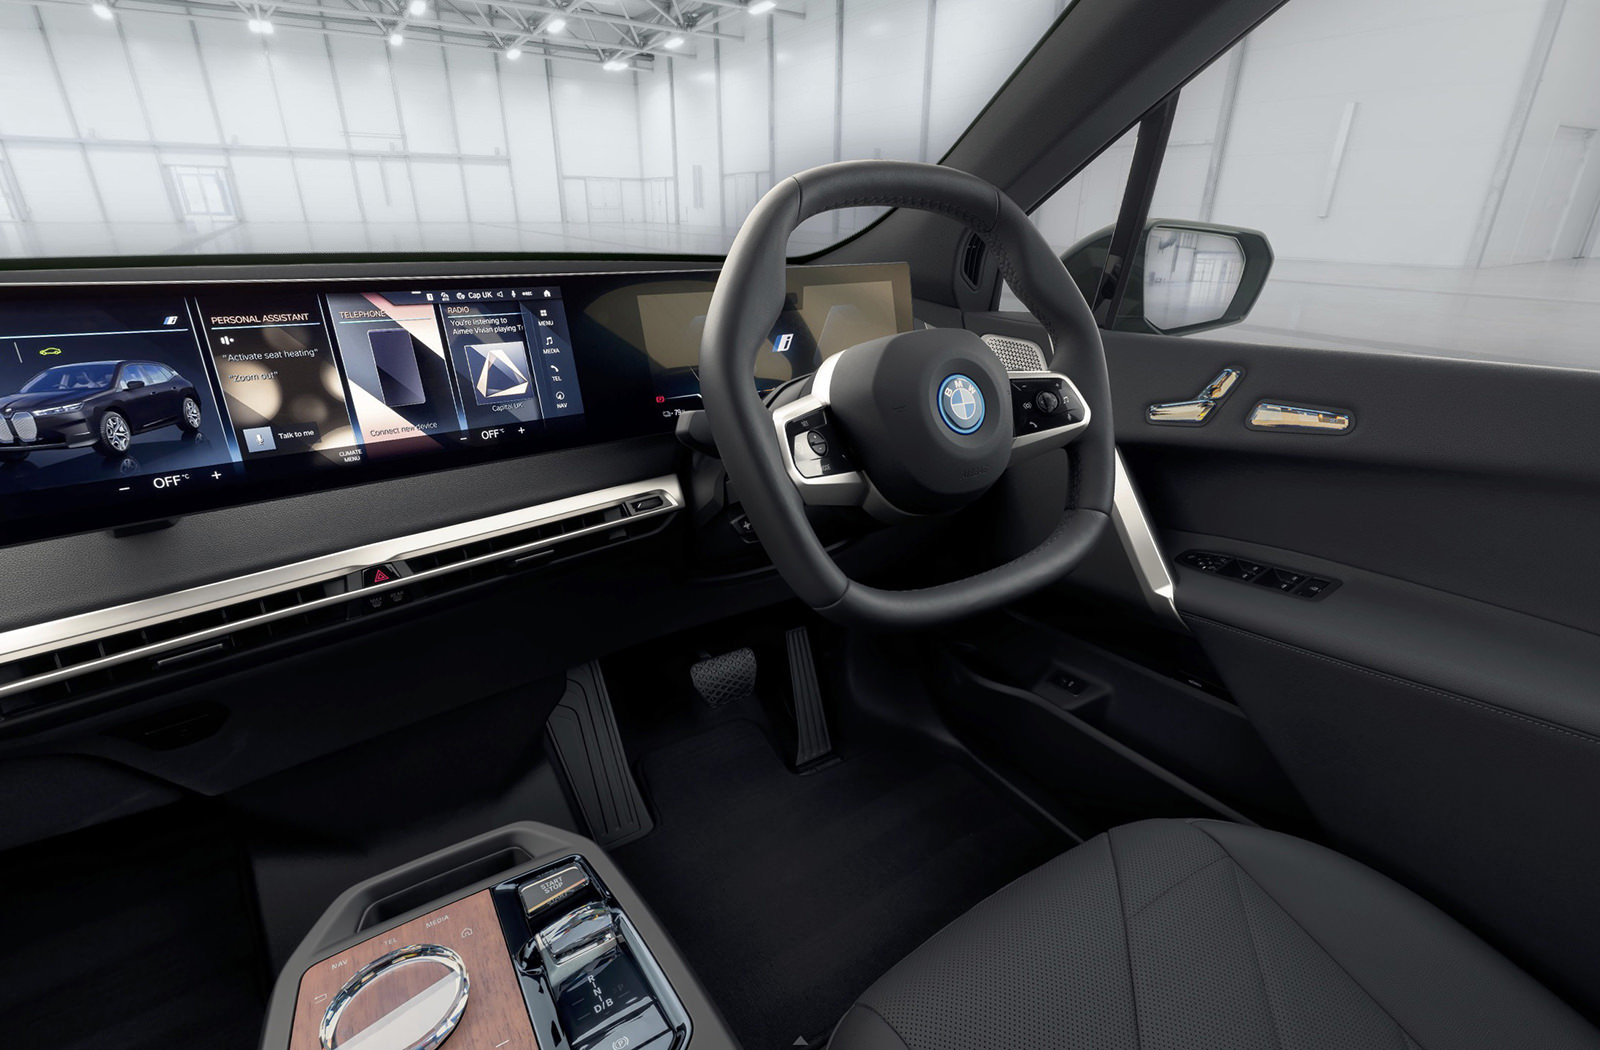 BMW Virtual Tour  BMW iX Interior 360 Tour by Eye Revolution